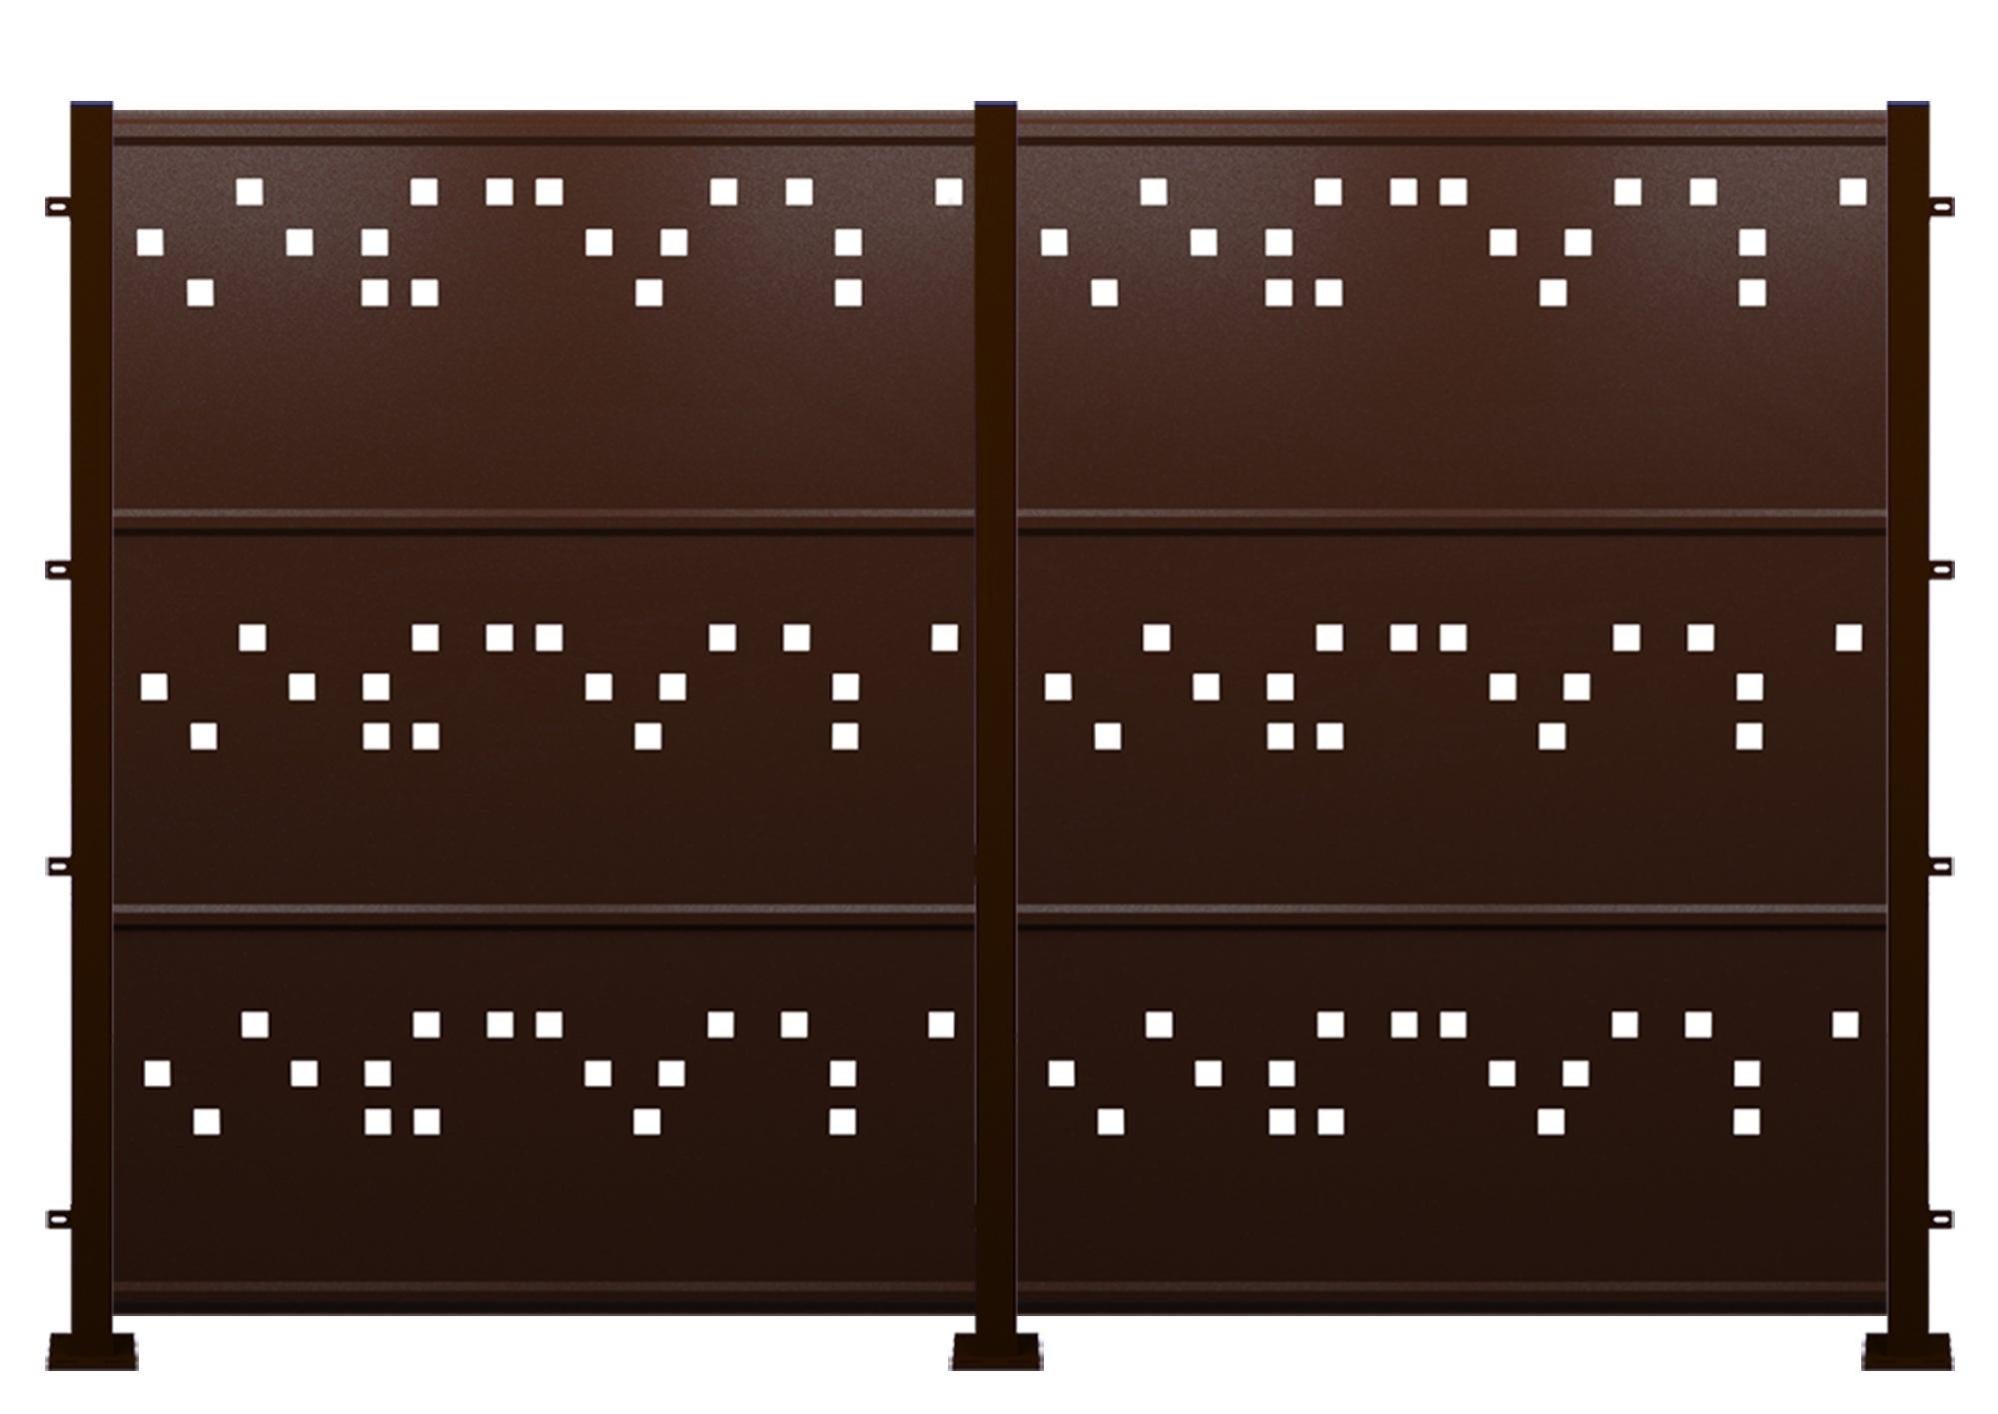 Kit valla de acero galvanizado cuadros marrón forja 306x200x13 cm